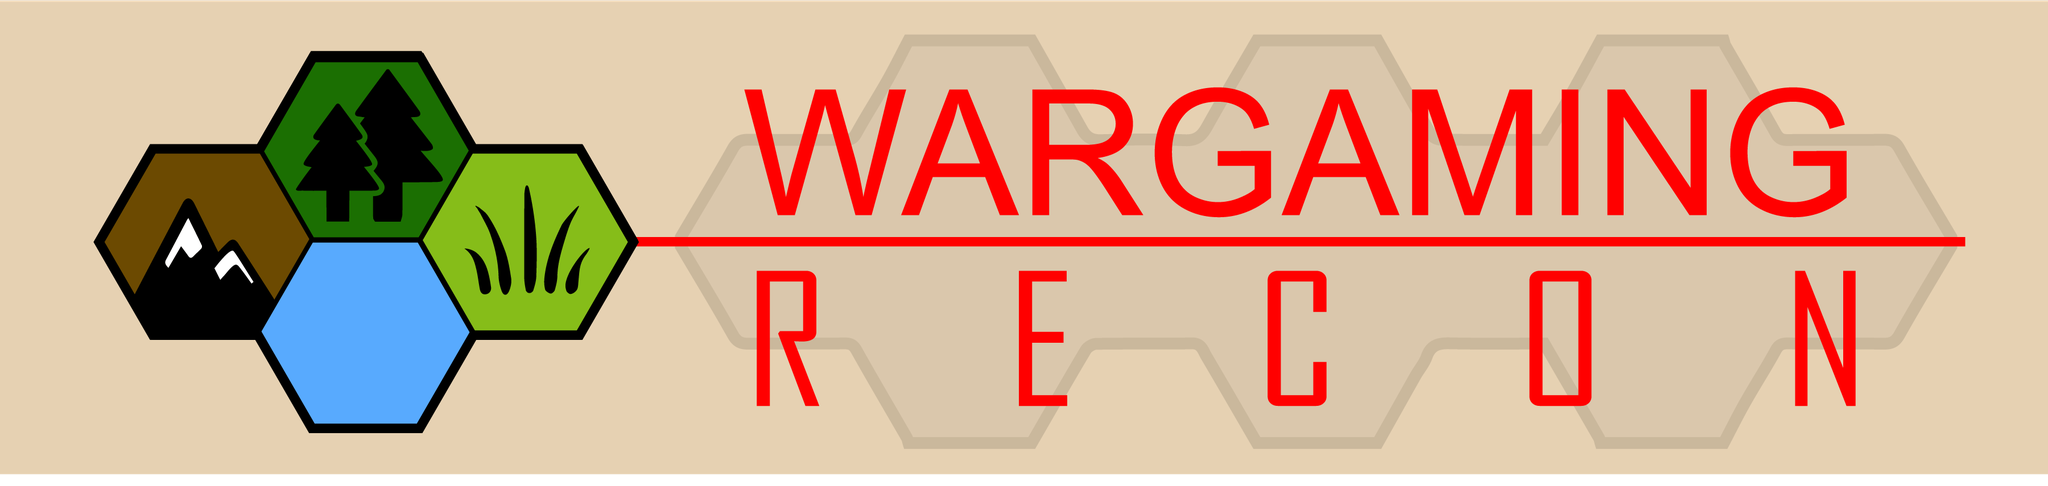 Wargaming Recon logo